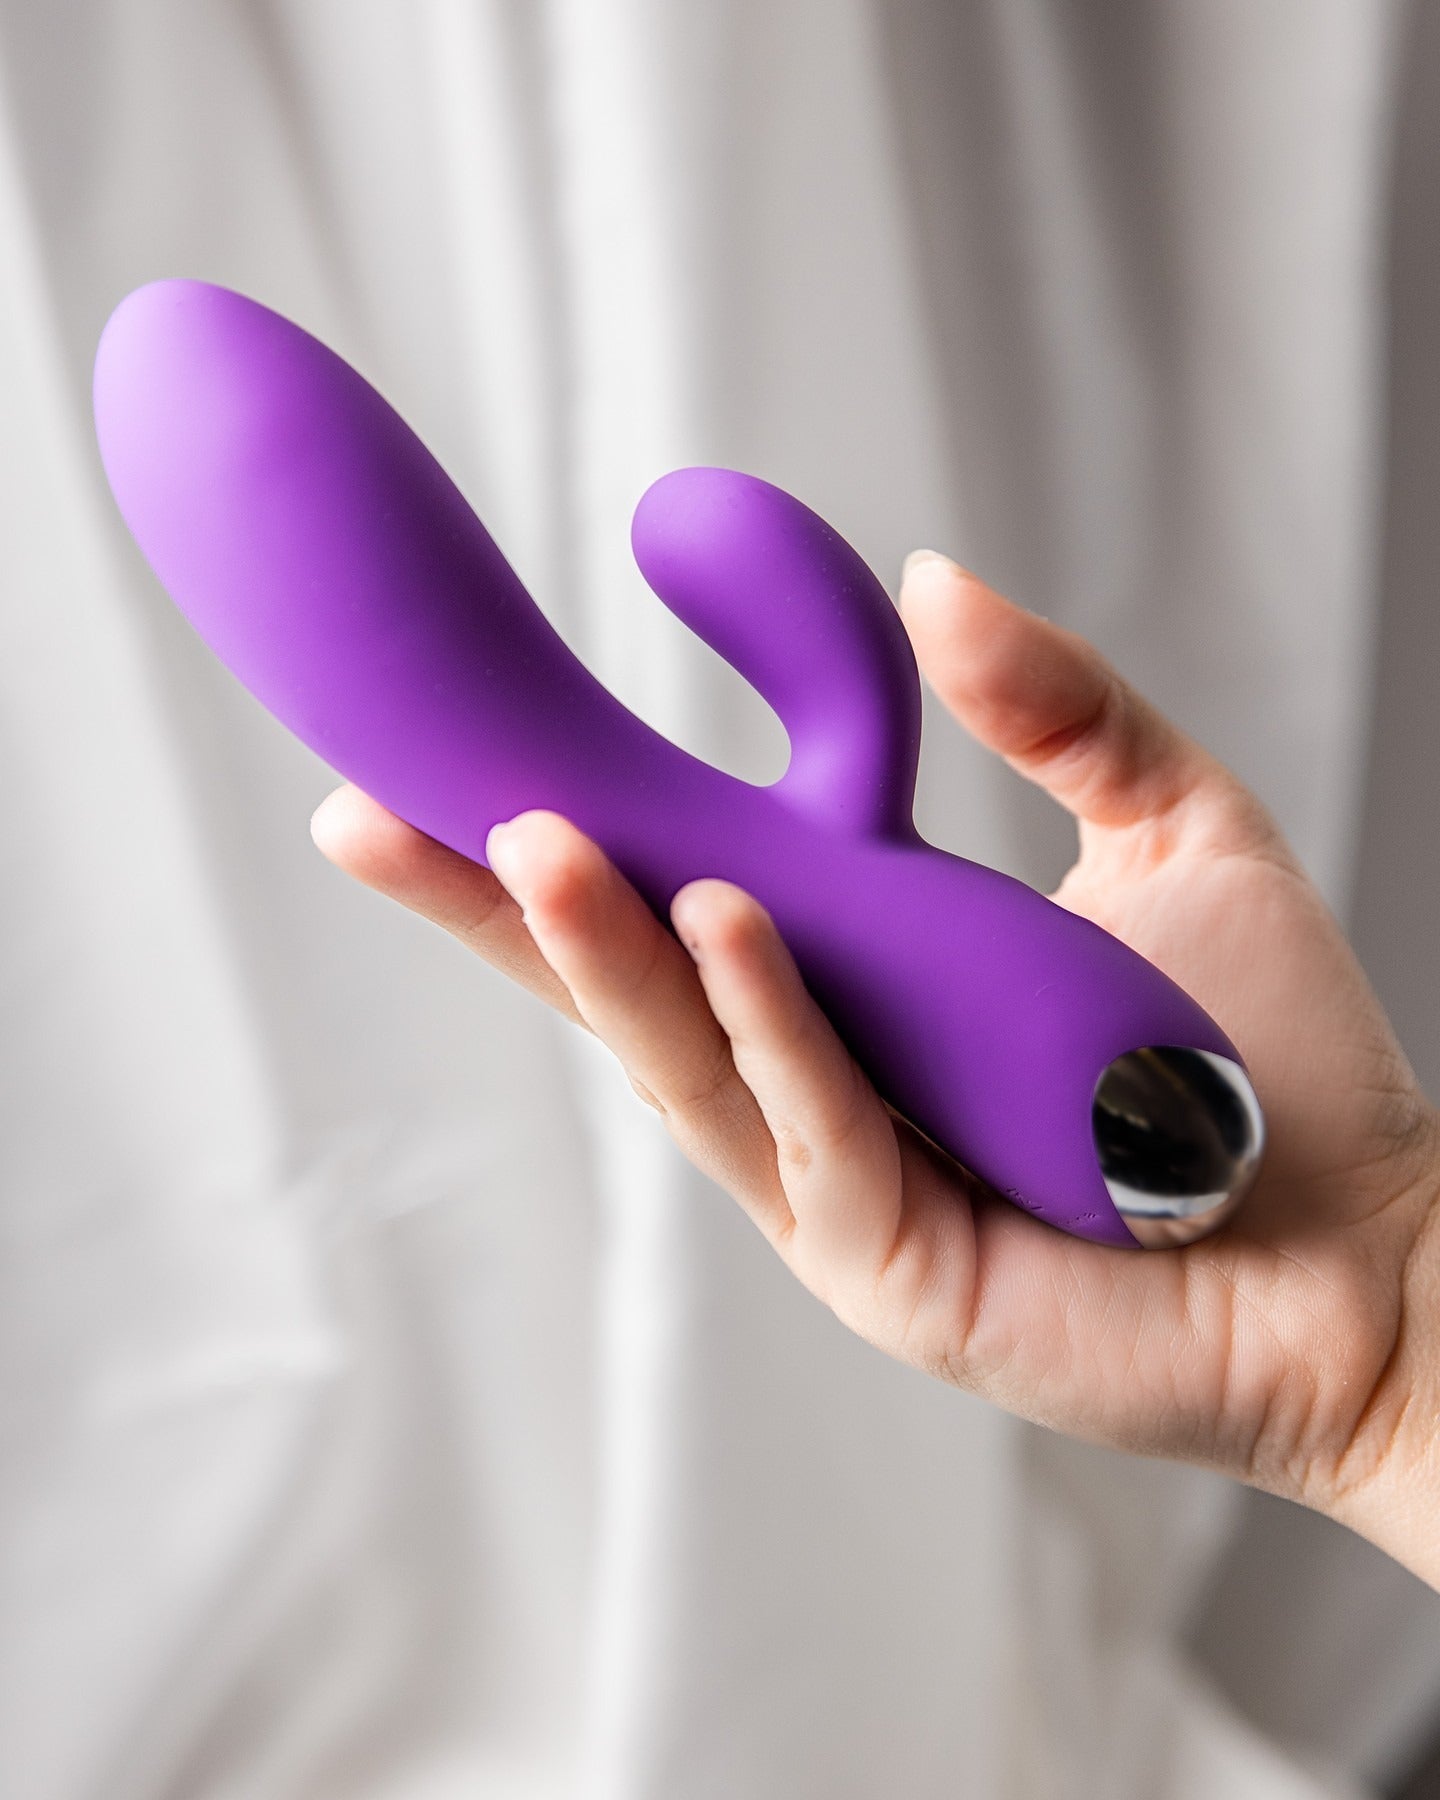 hand holding purple rabbit vibrator